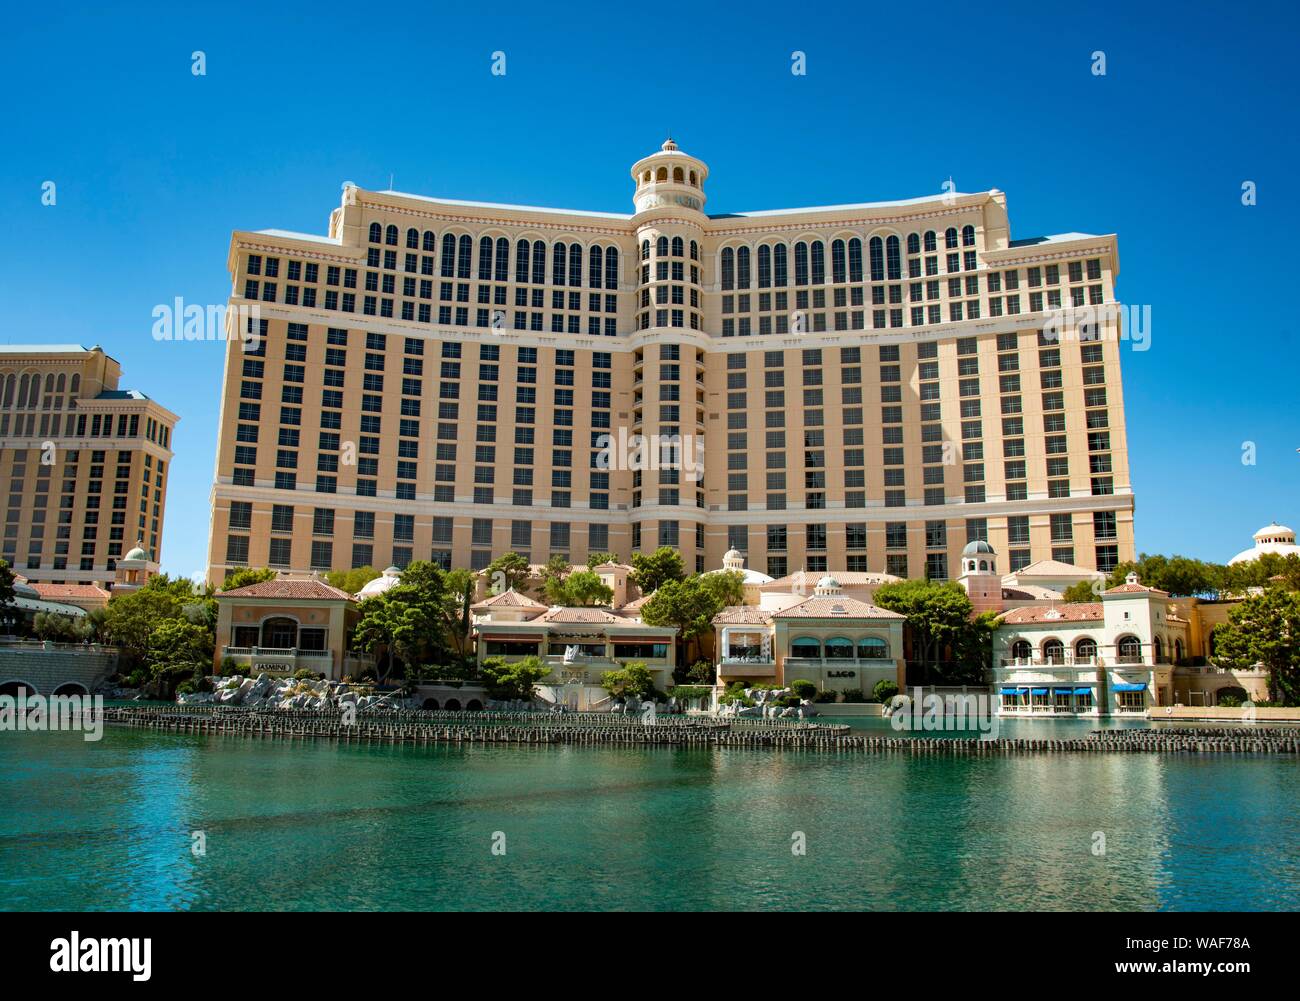 Hotel Bellagio with artificial lake, casino, luxury hotel, Las Vegas Strip, Las Vegas, Nevada, US Stock Photo